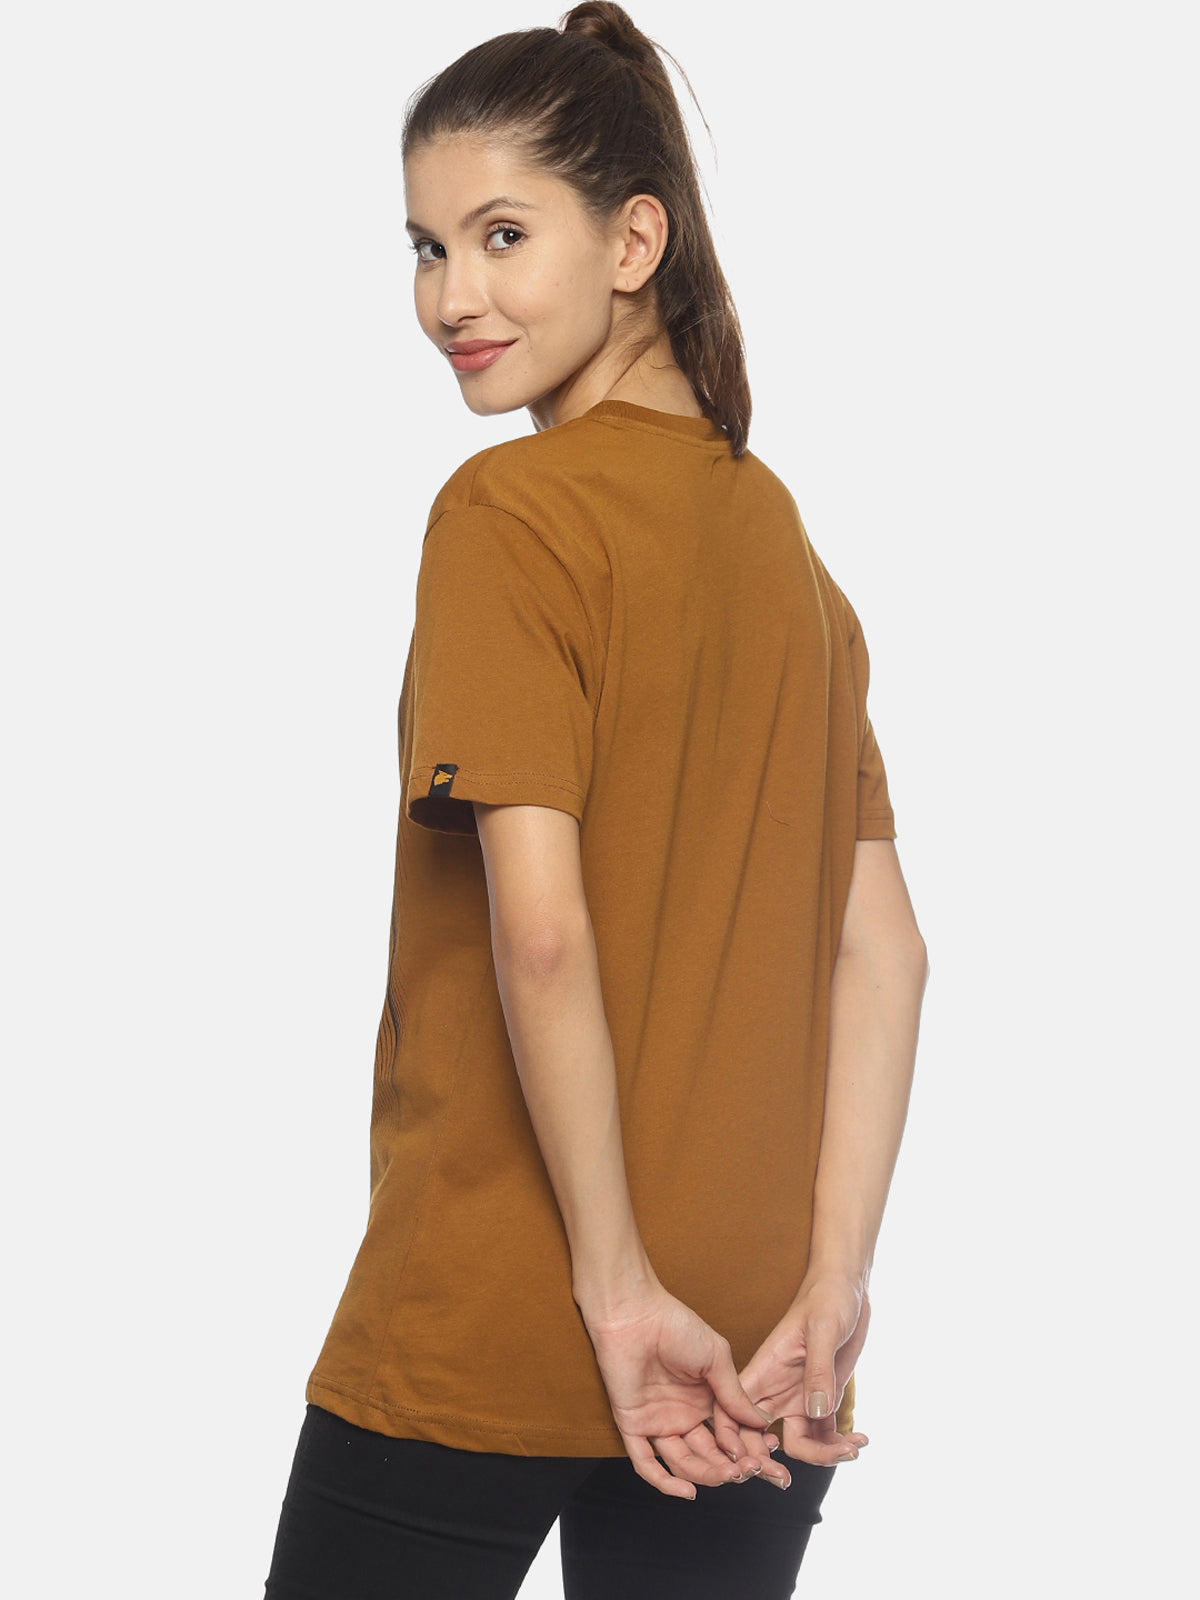 Wolfpack Women Golden Brown Parasailing Printed T-Shirt Wolfpack